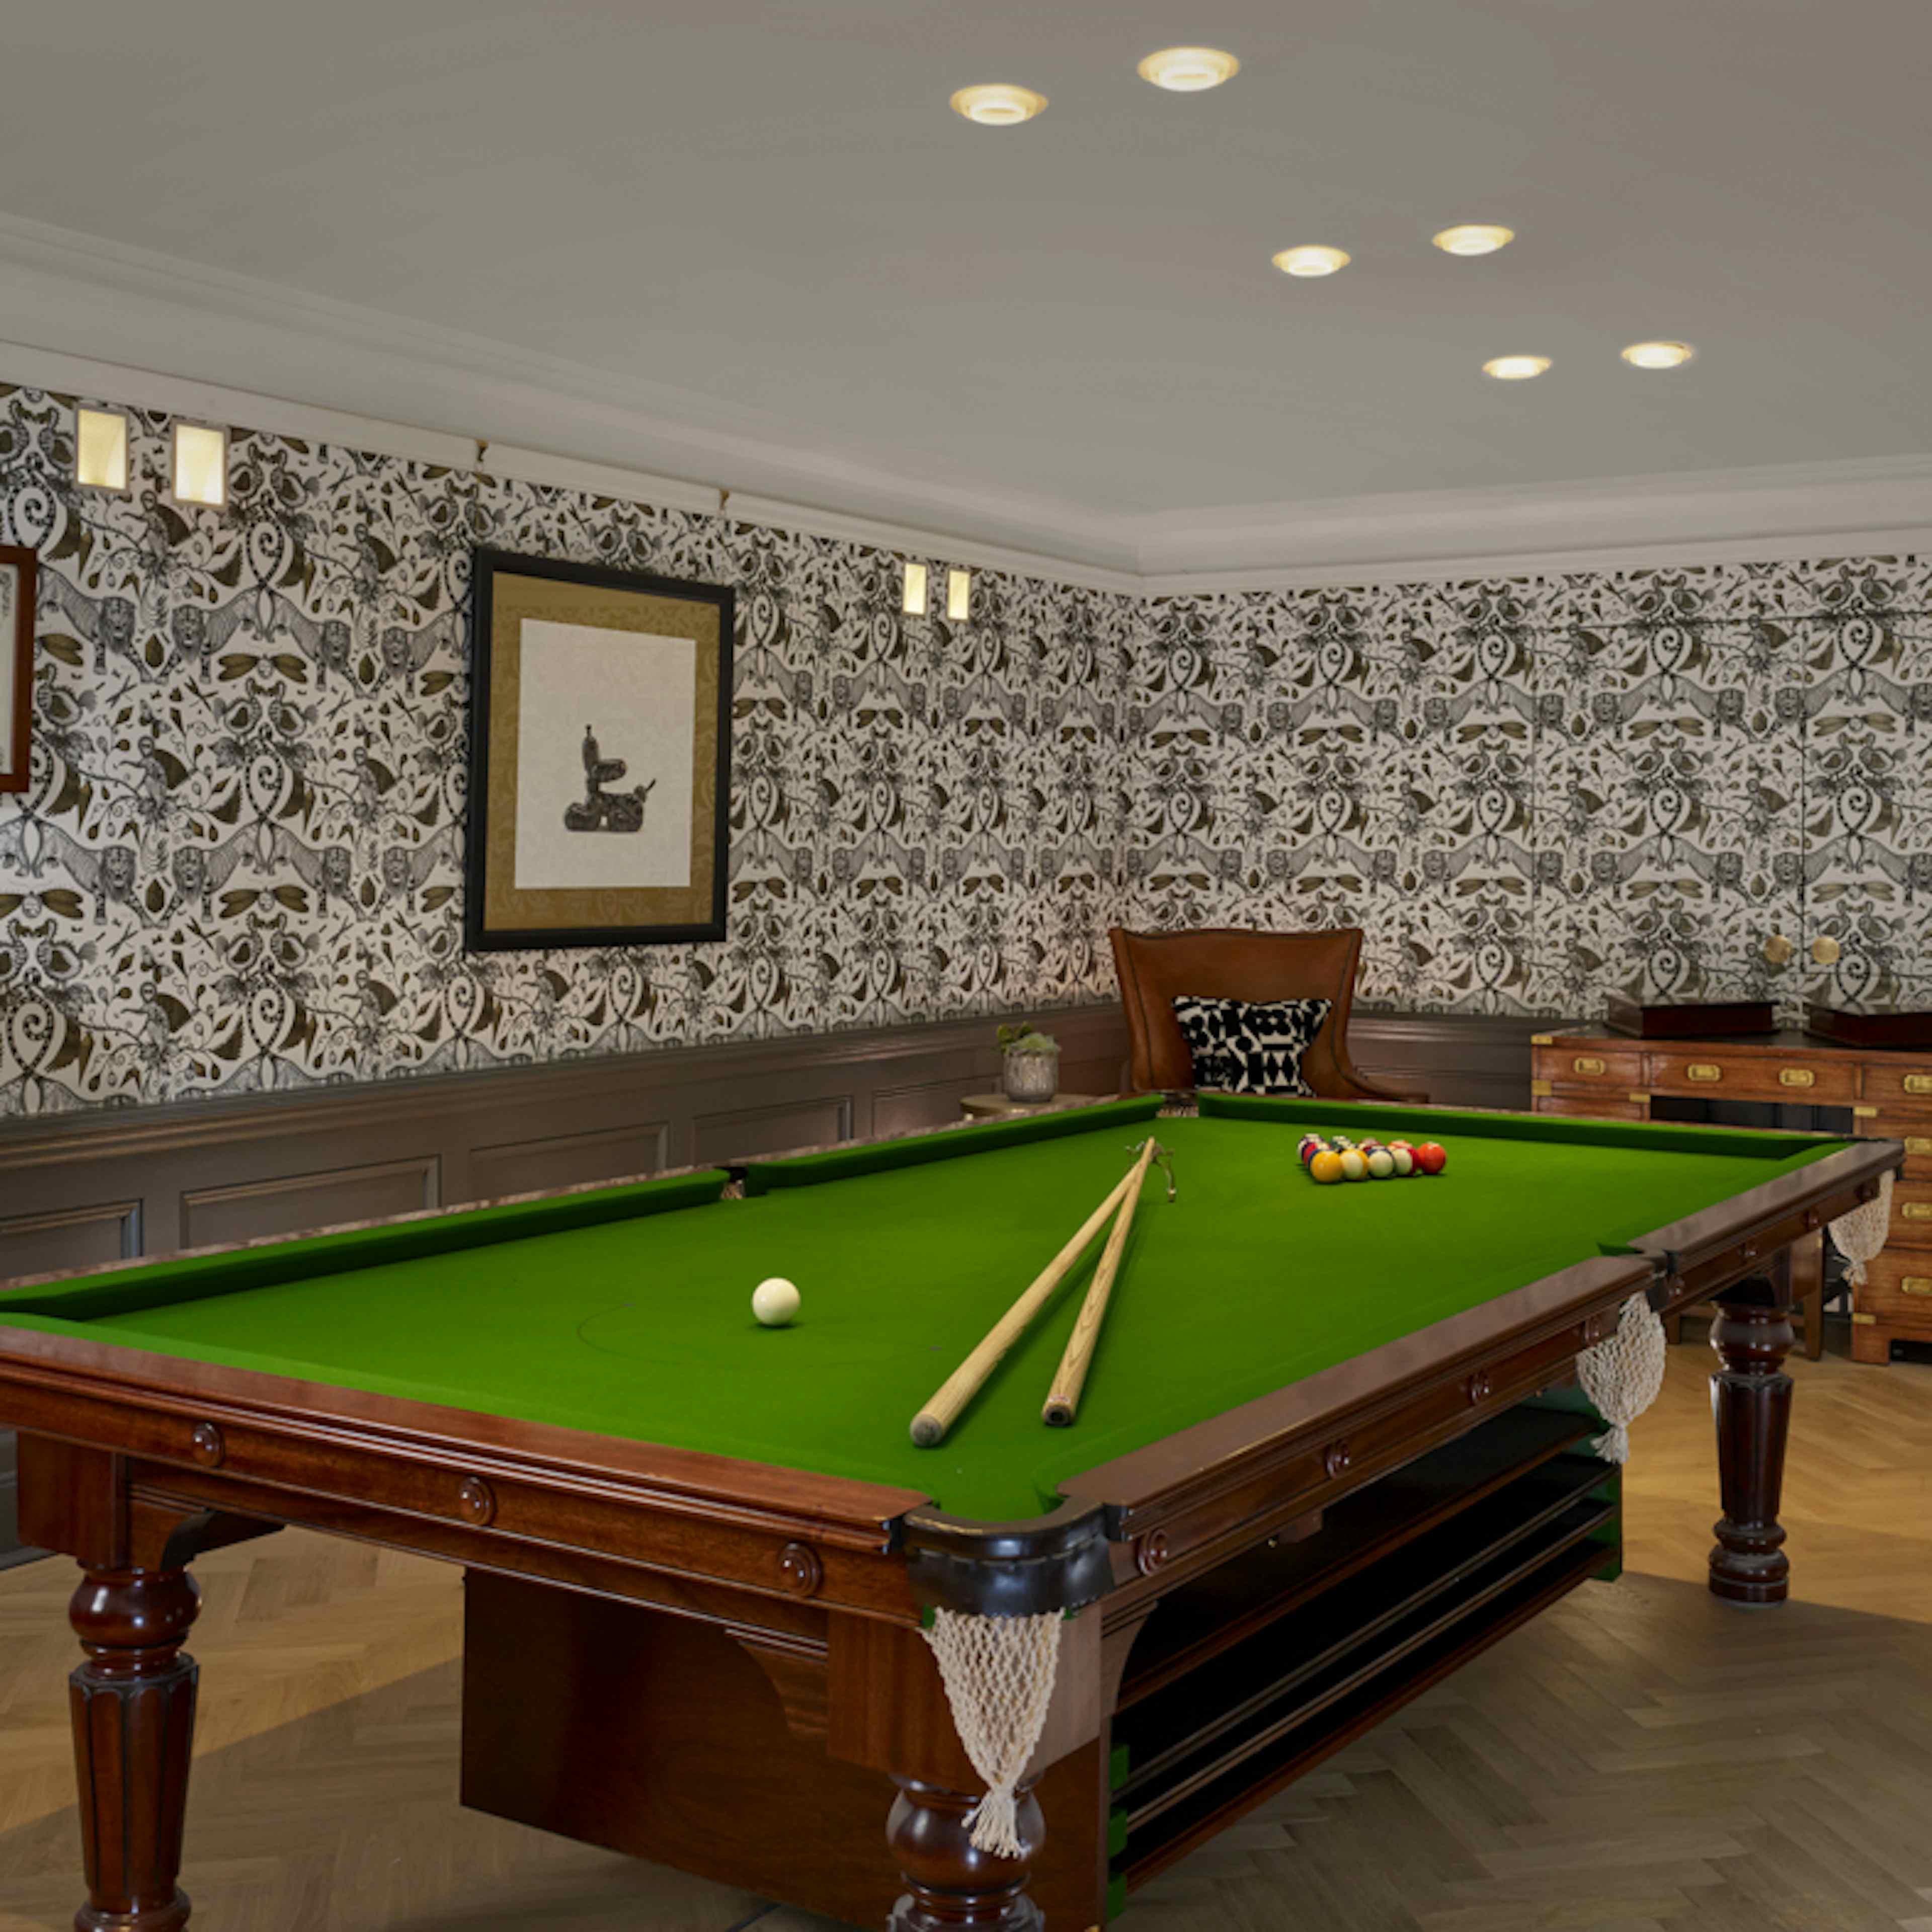 Holmes Hotel London - The Billiards Room image 1